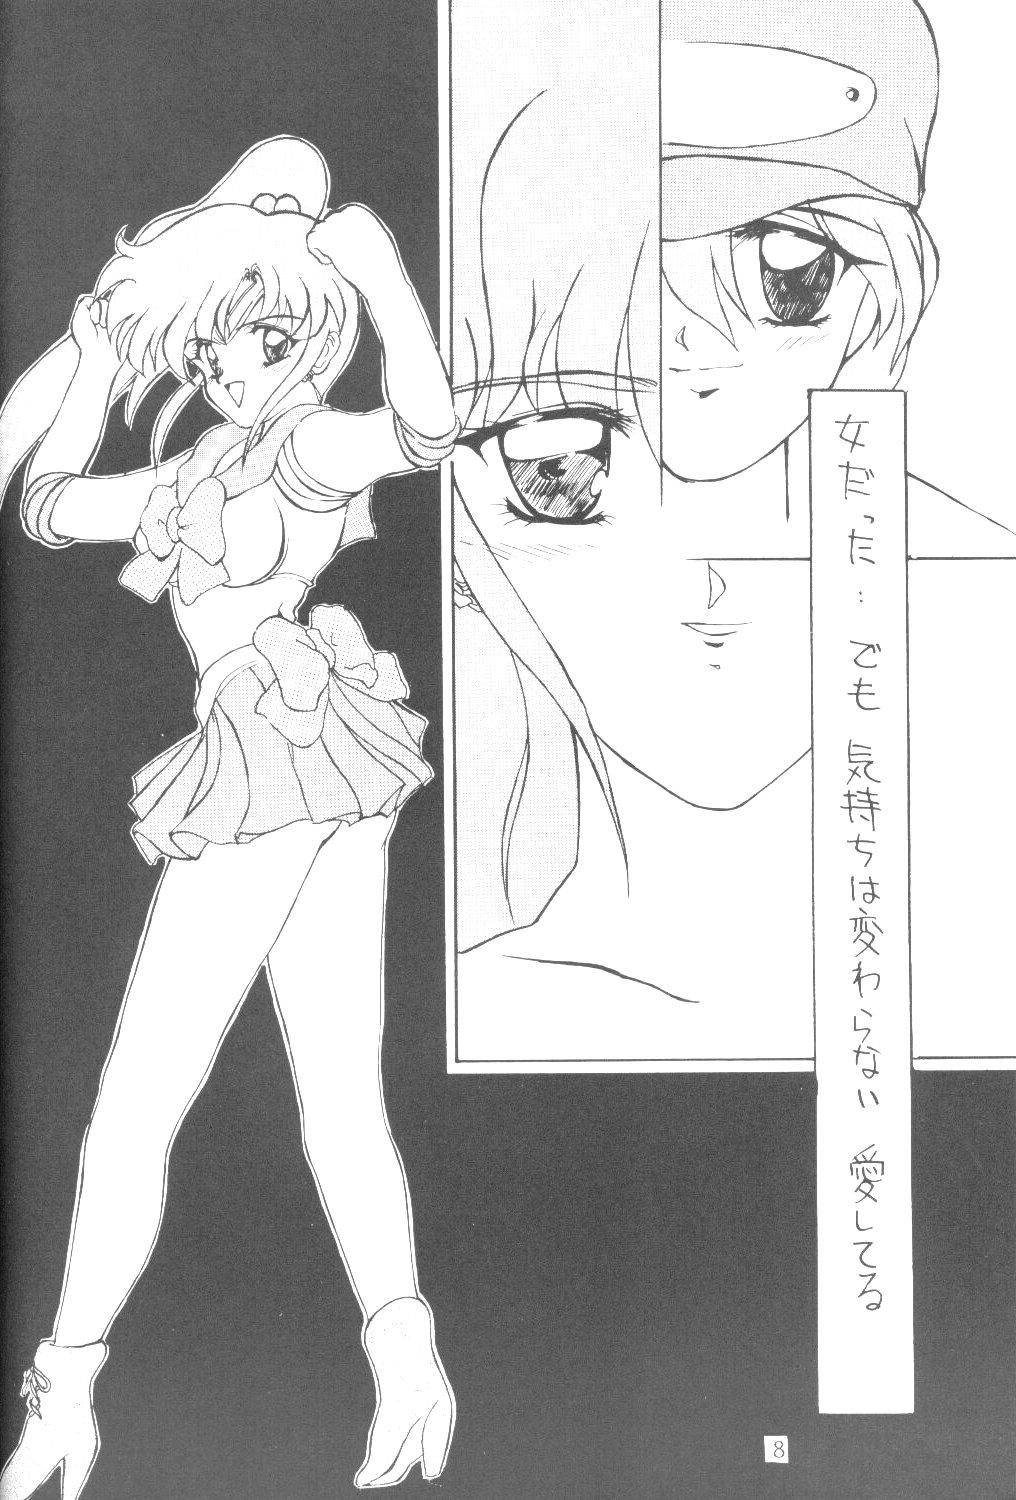 Ex Girlfriend ALIVE AMI LOST - Sailor moon Male - Page 7